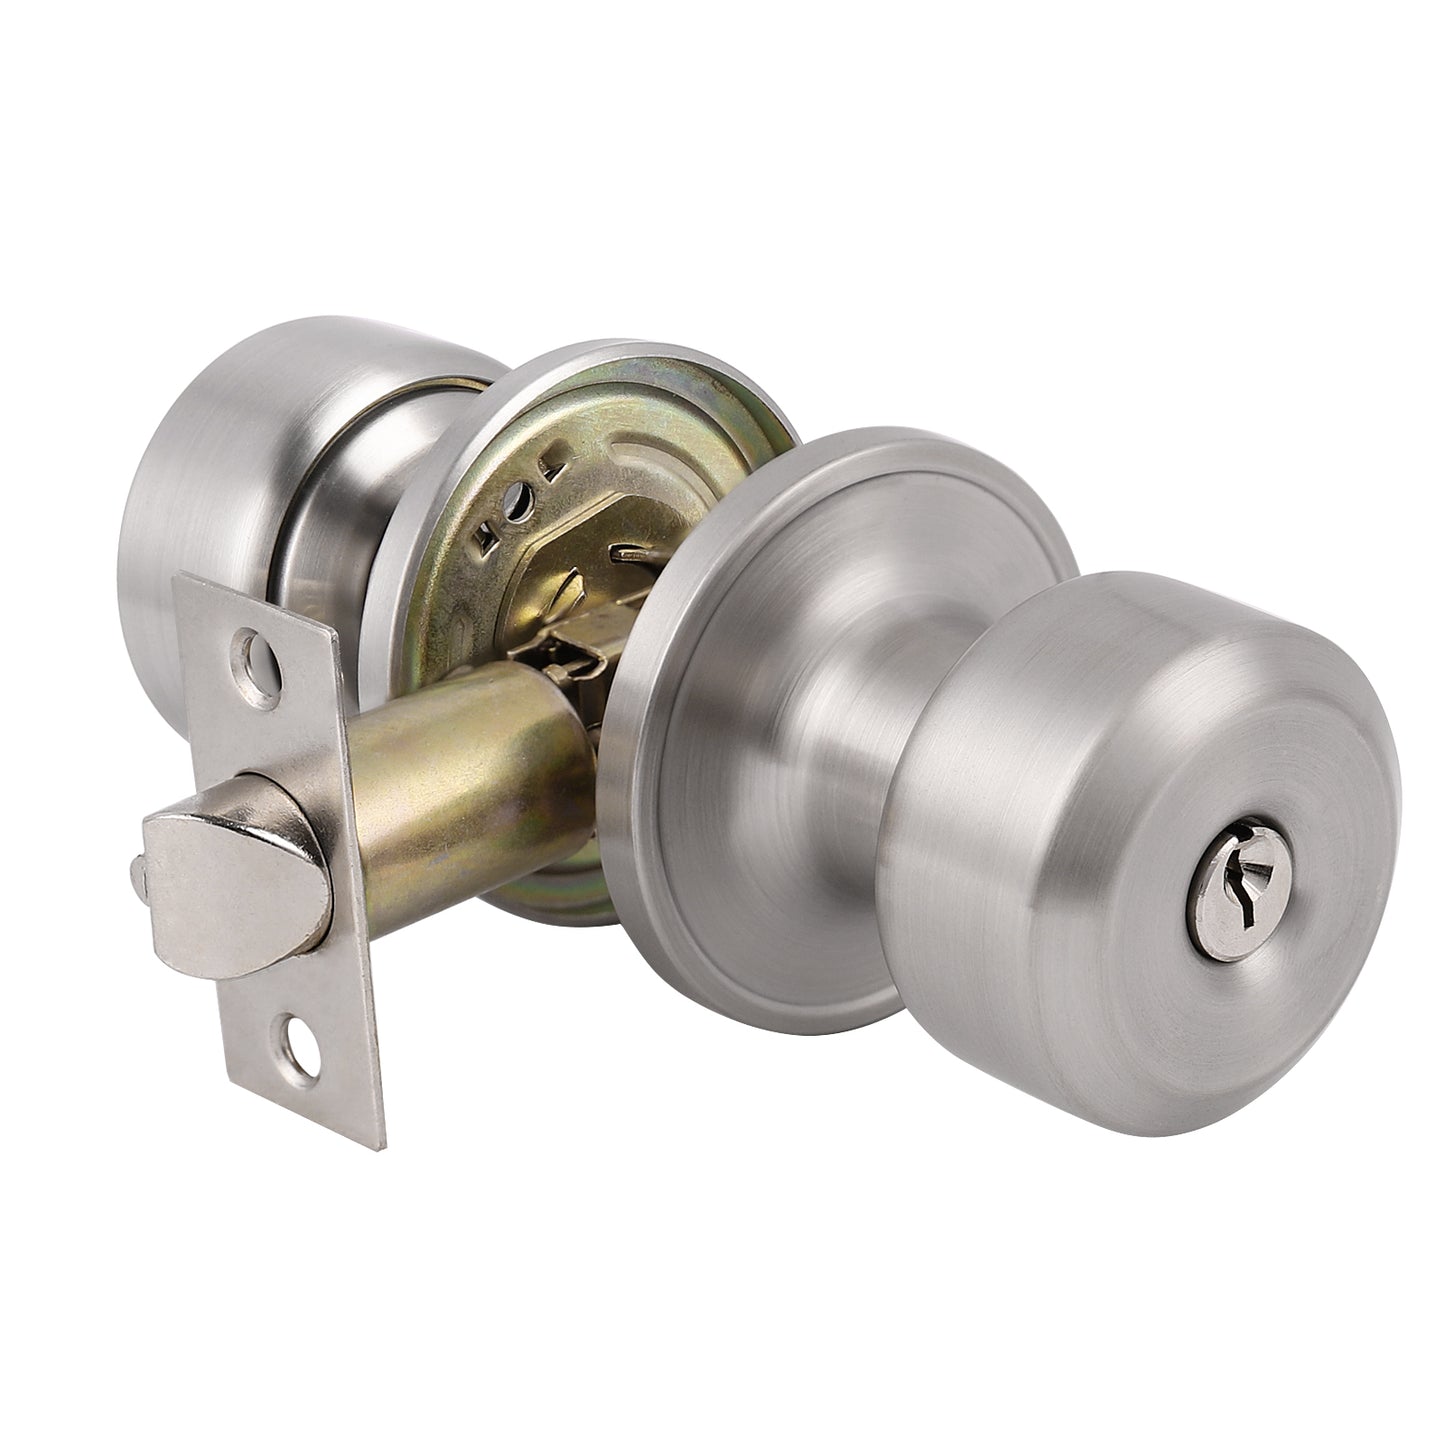 Satin Nickel Finish Entry Door Lock with Same Key, Cylinderical Ball Knob Style - Probrico